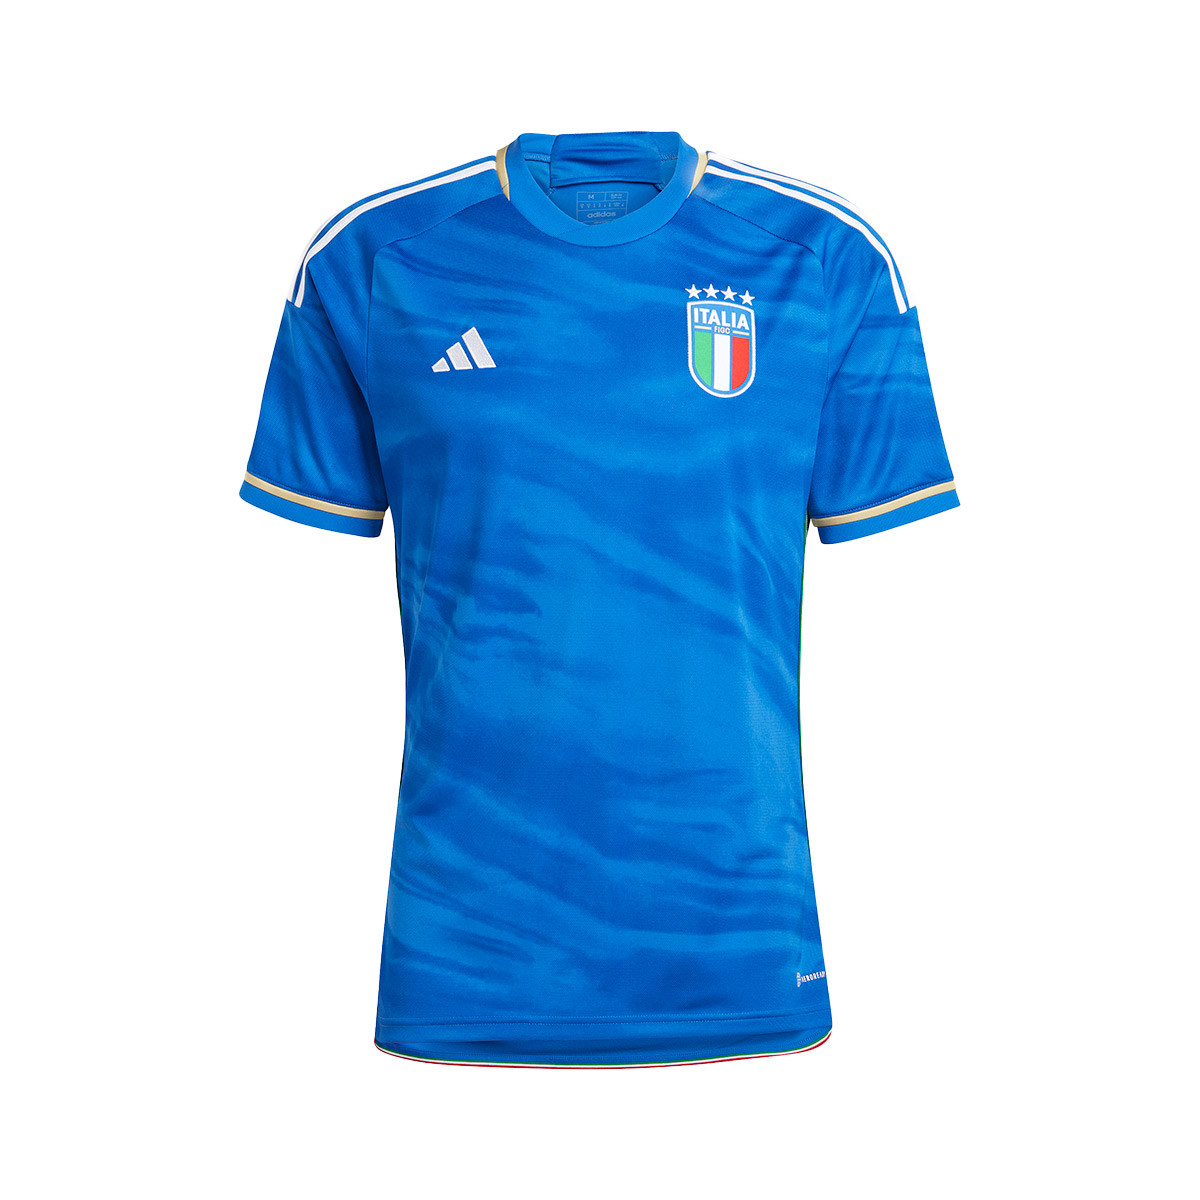 Belgium 2022 Adidas Home Kit - Football Shirt Culture - Latest